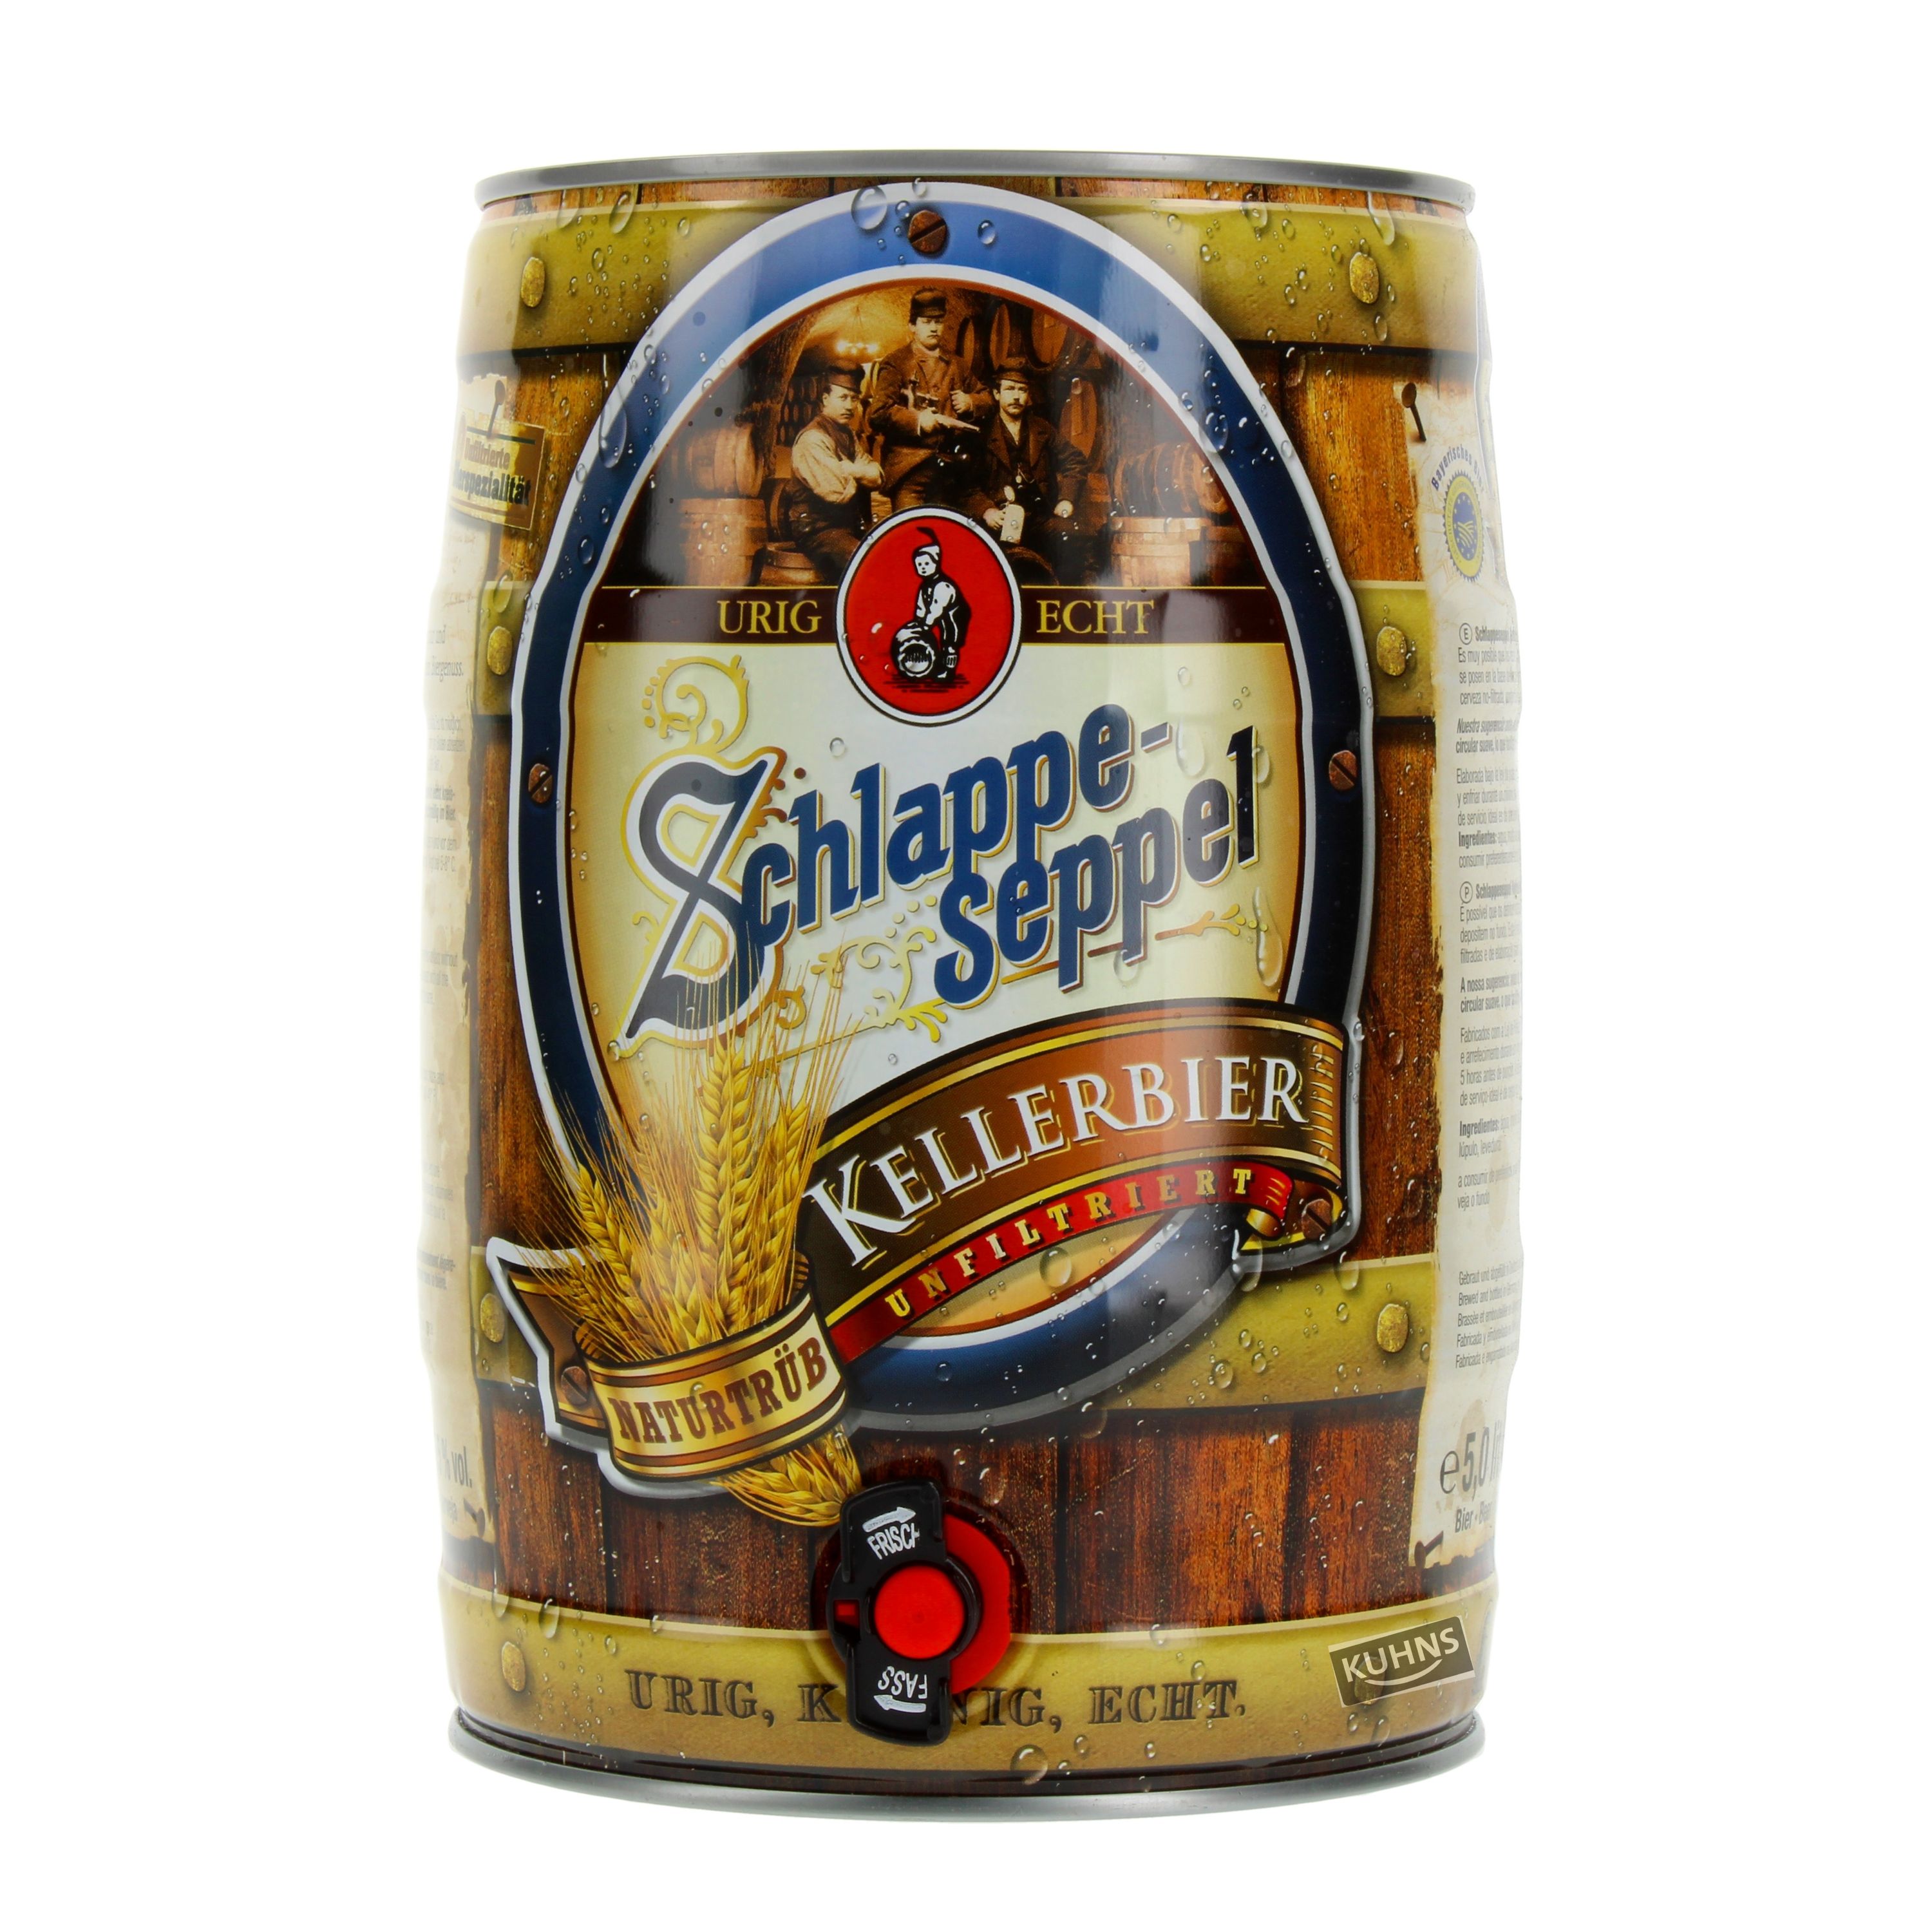 Schlappeseppel cellar beer party keg 5.0l, alc. 5.5% by volume